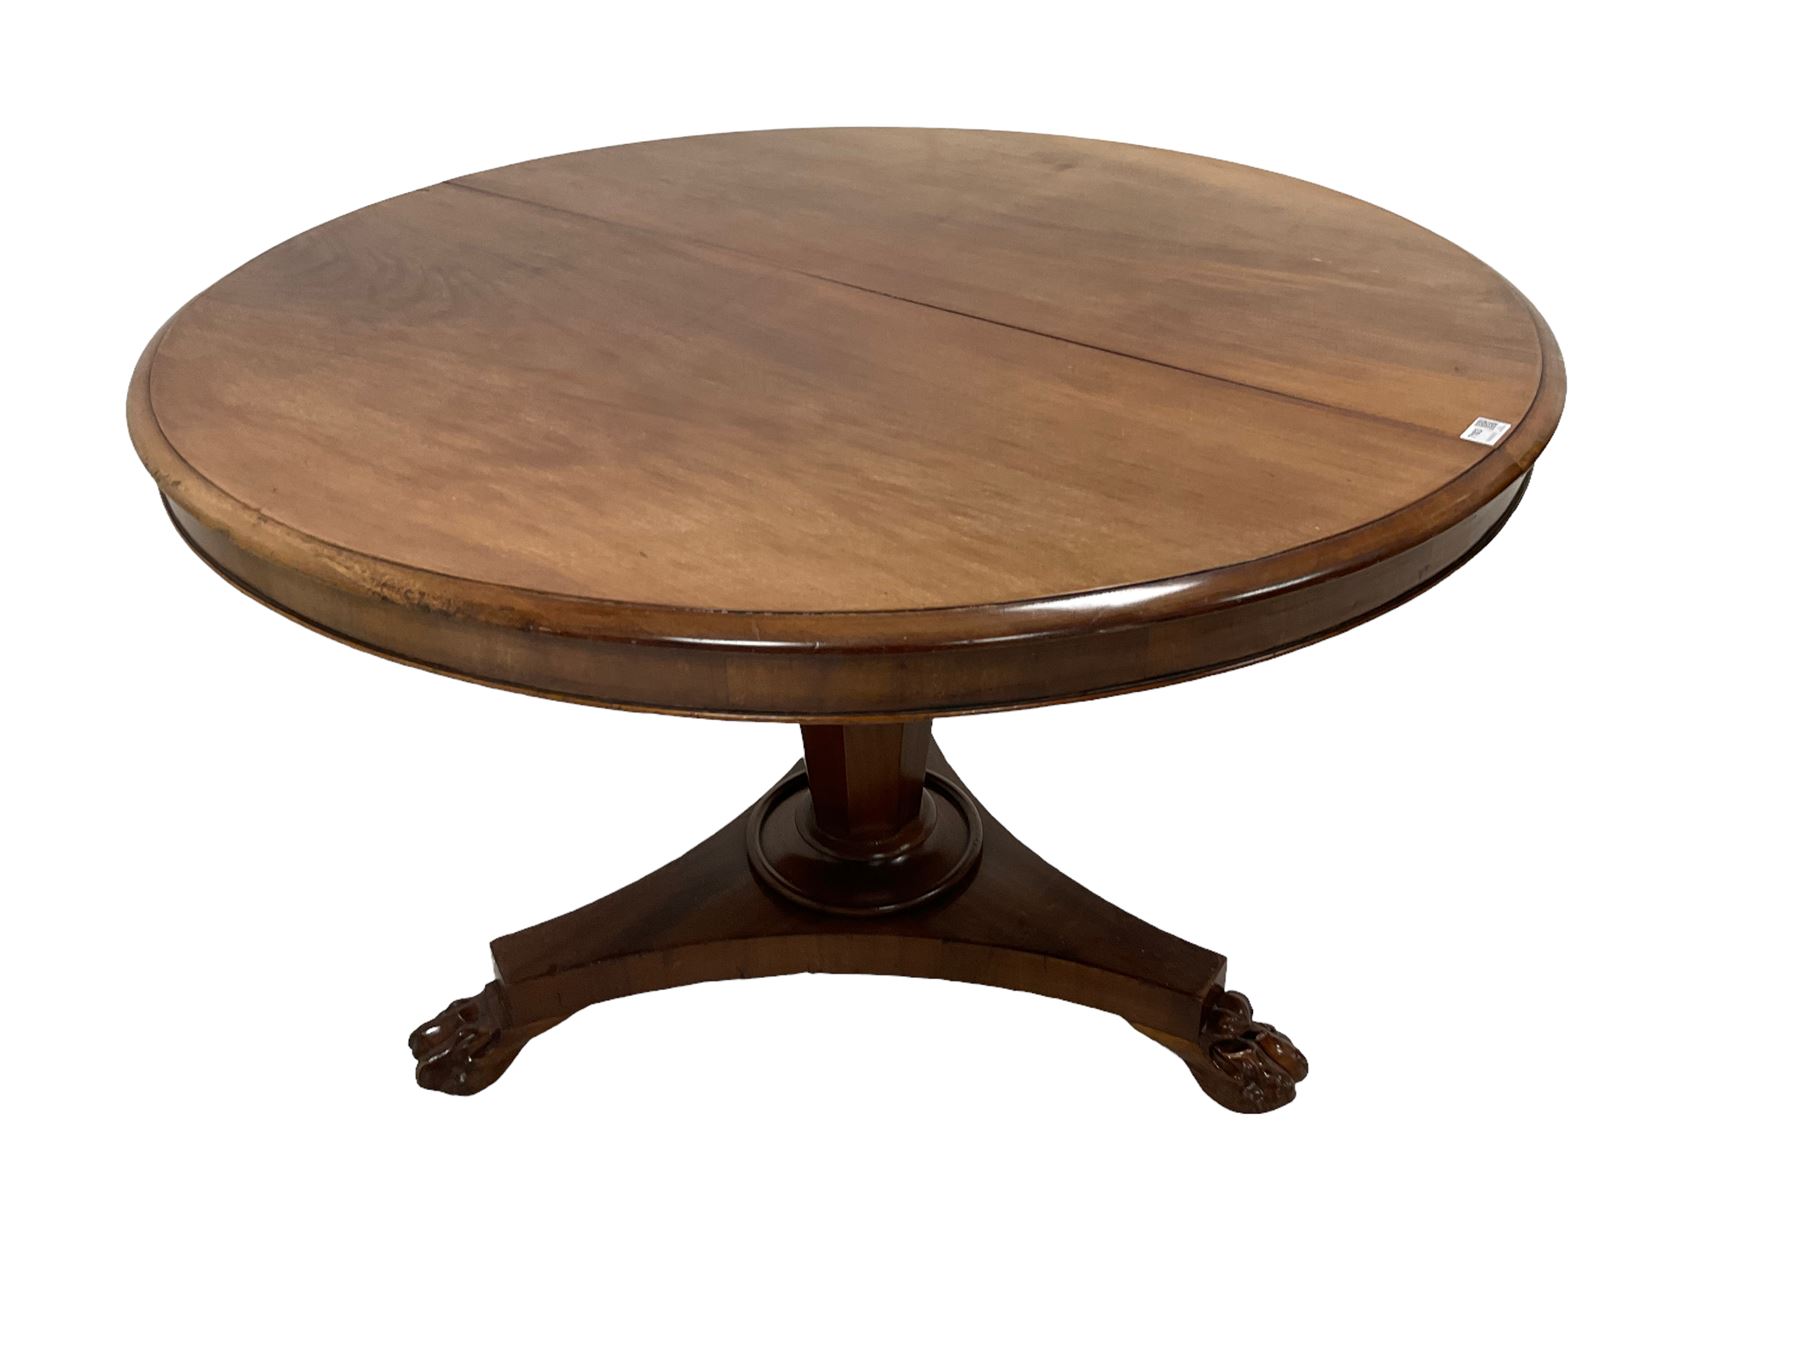 19th century mahogany circular centre table - Image 2 of 3